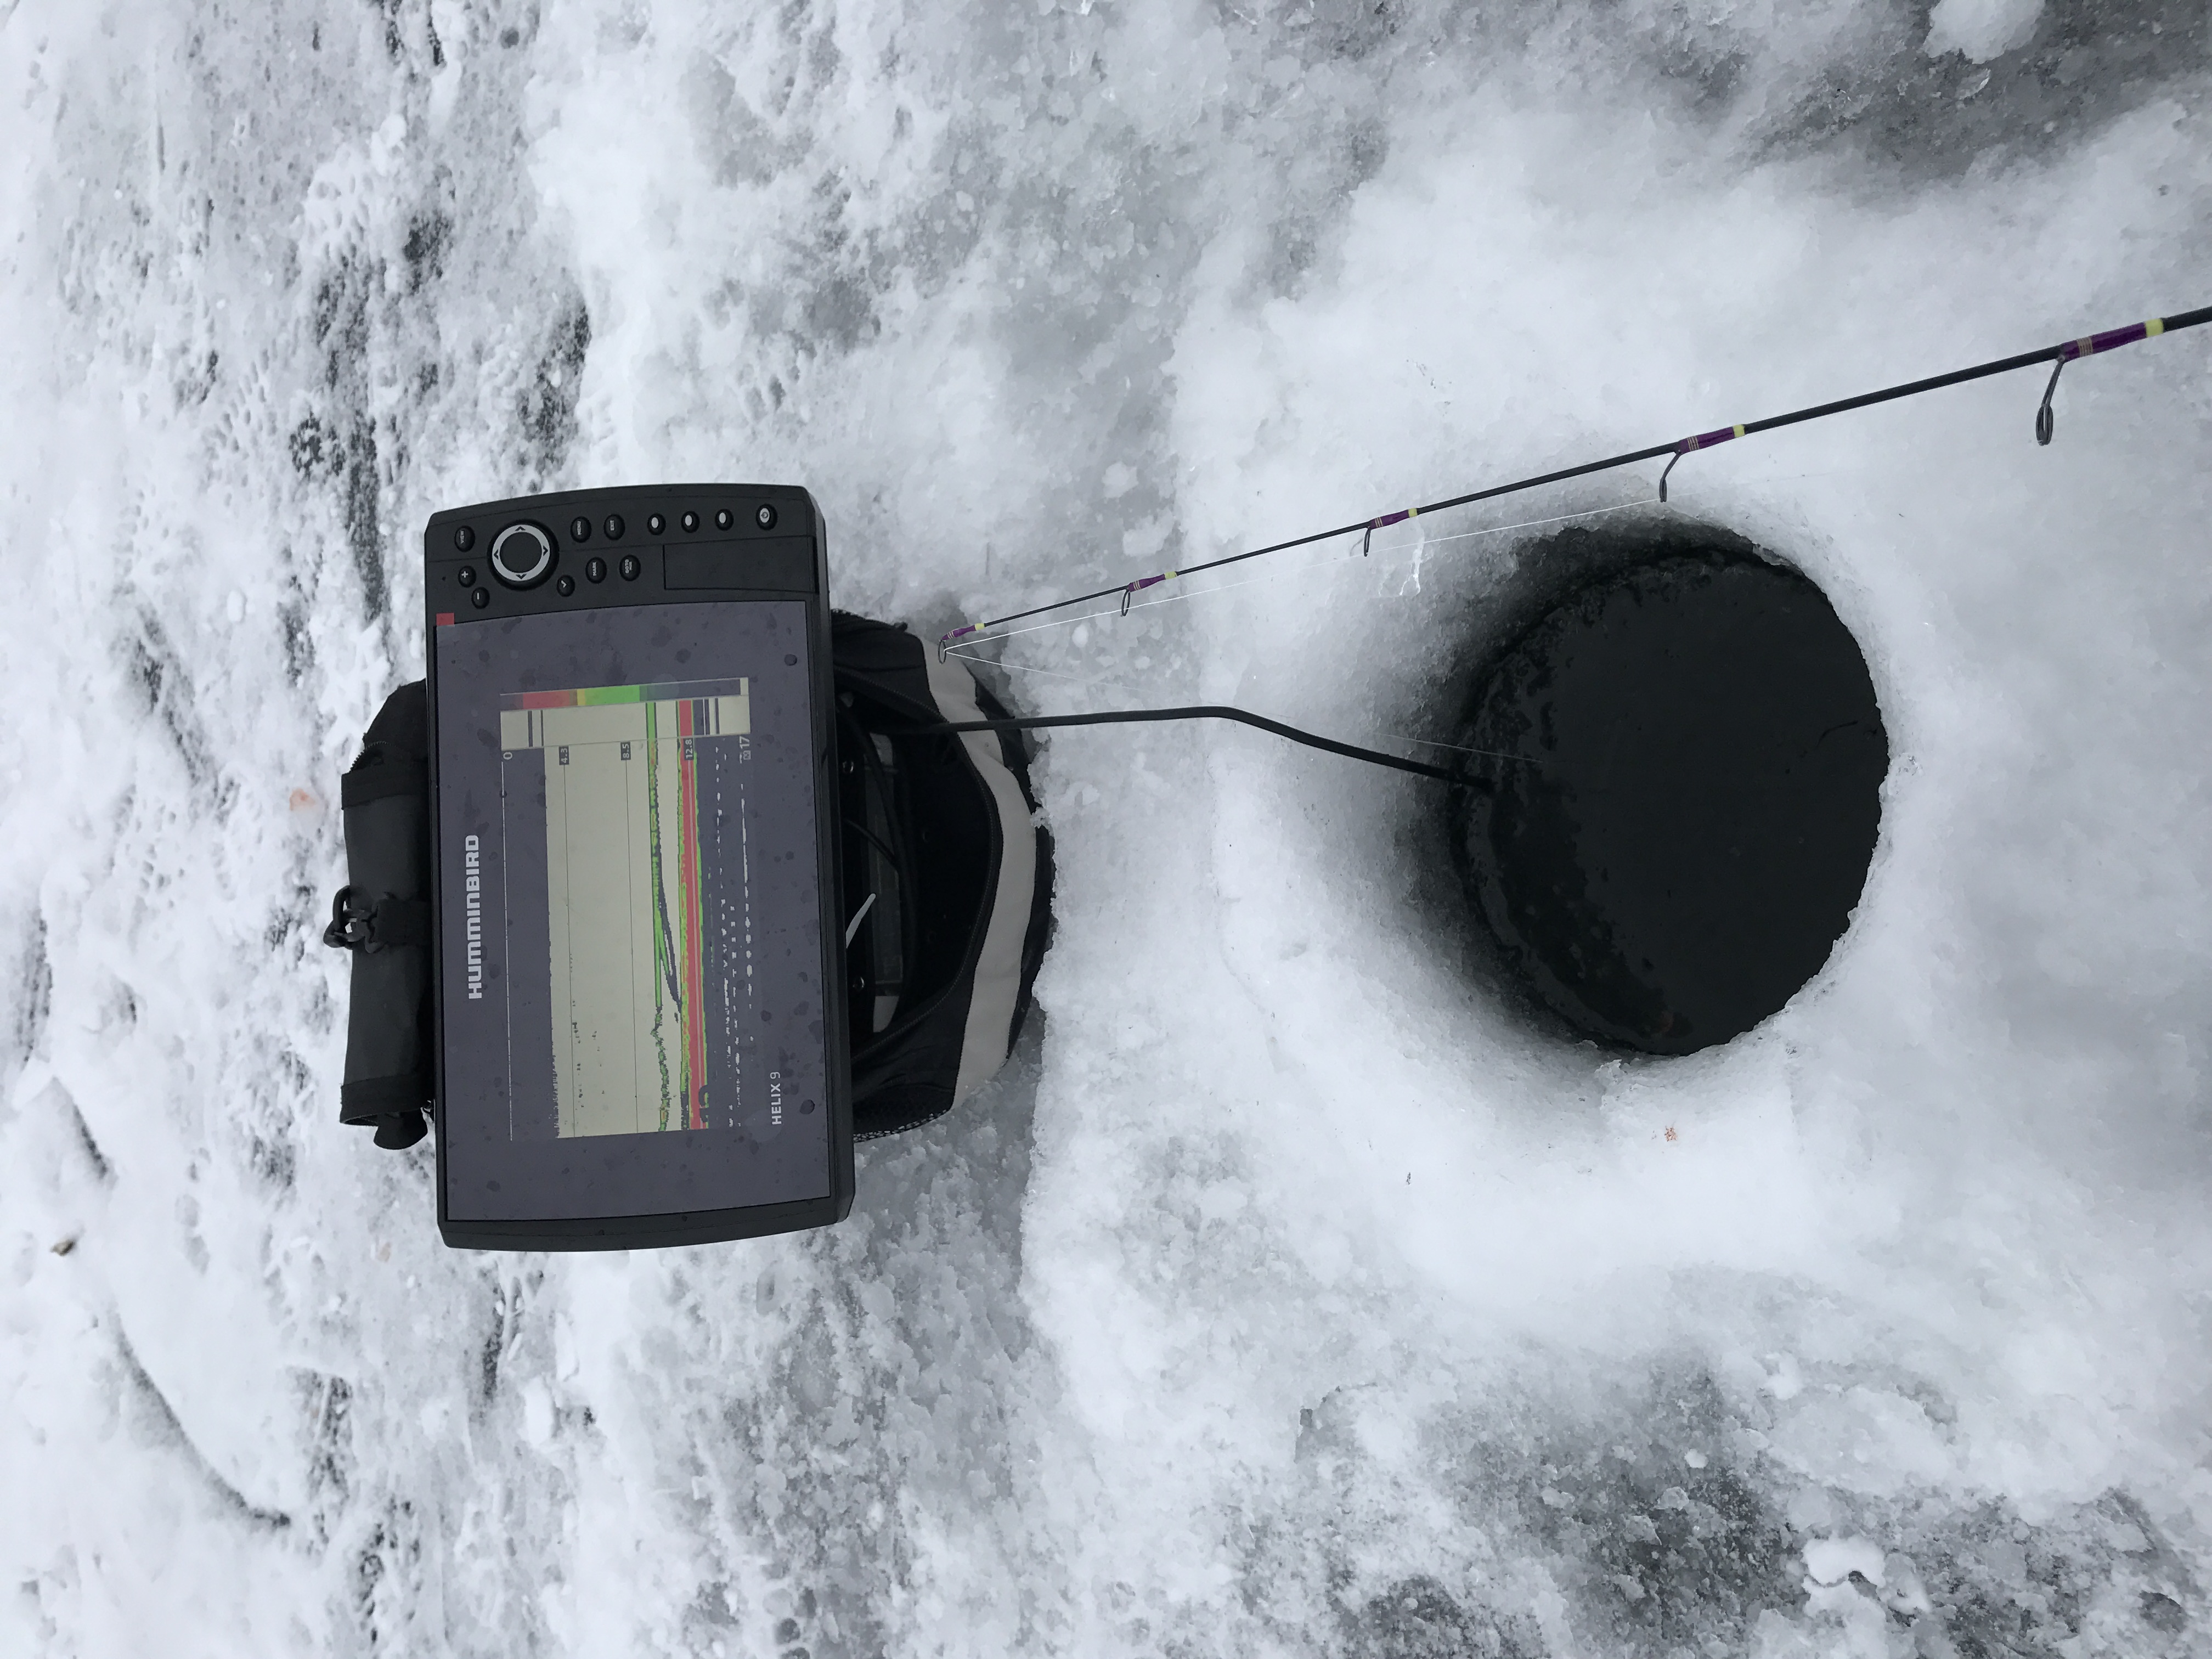 Using Helix 9si on the ice - Ice Fishing Forum - Ice Fishing Forum